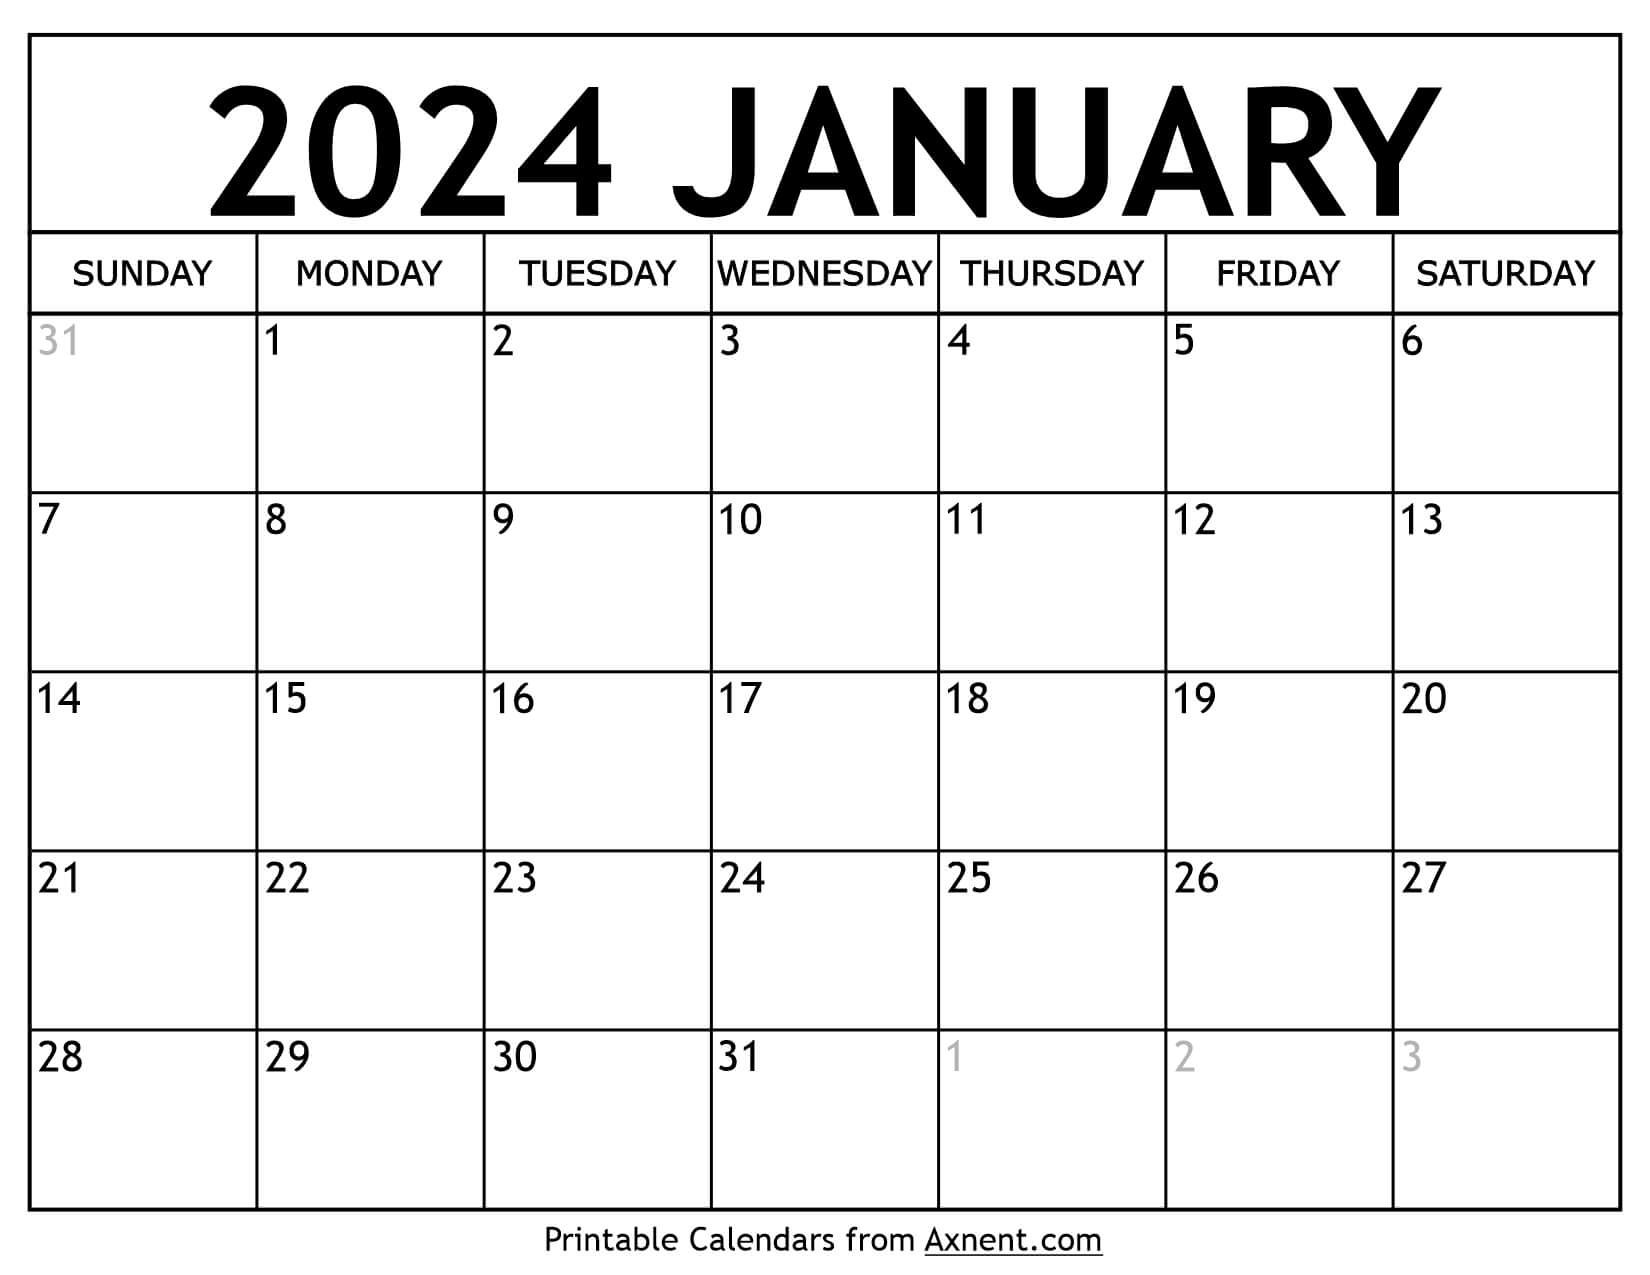 Printable January 2024 Calendar Template - Print Now for Blank Calendar Template January 2024 Printable